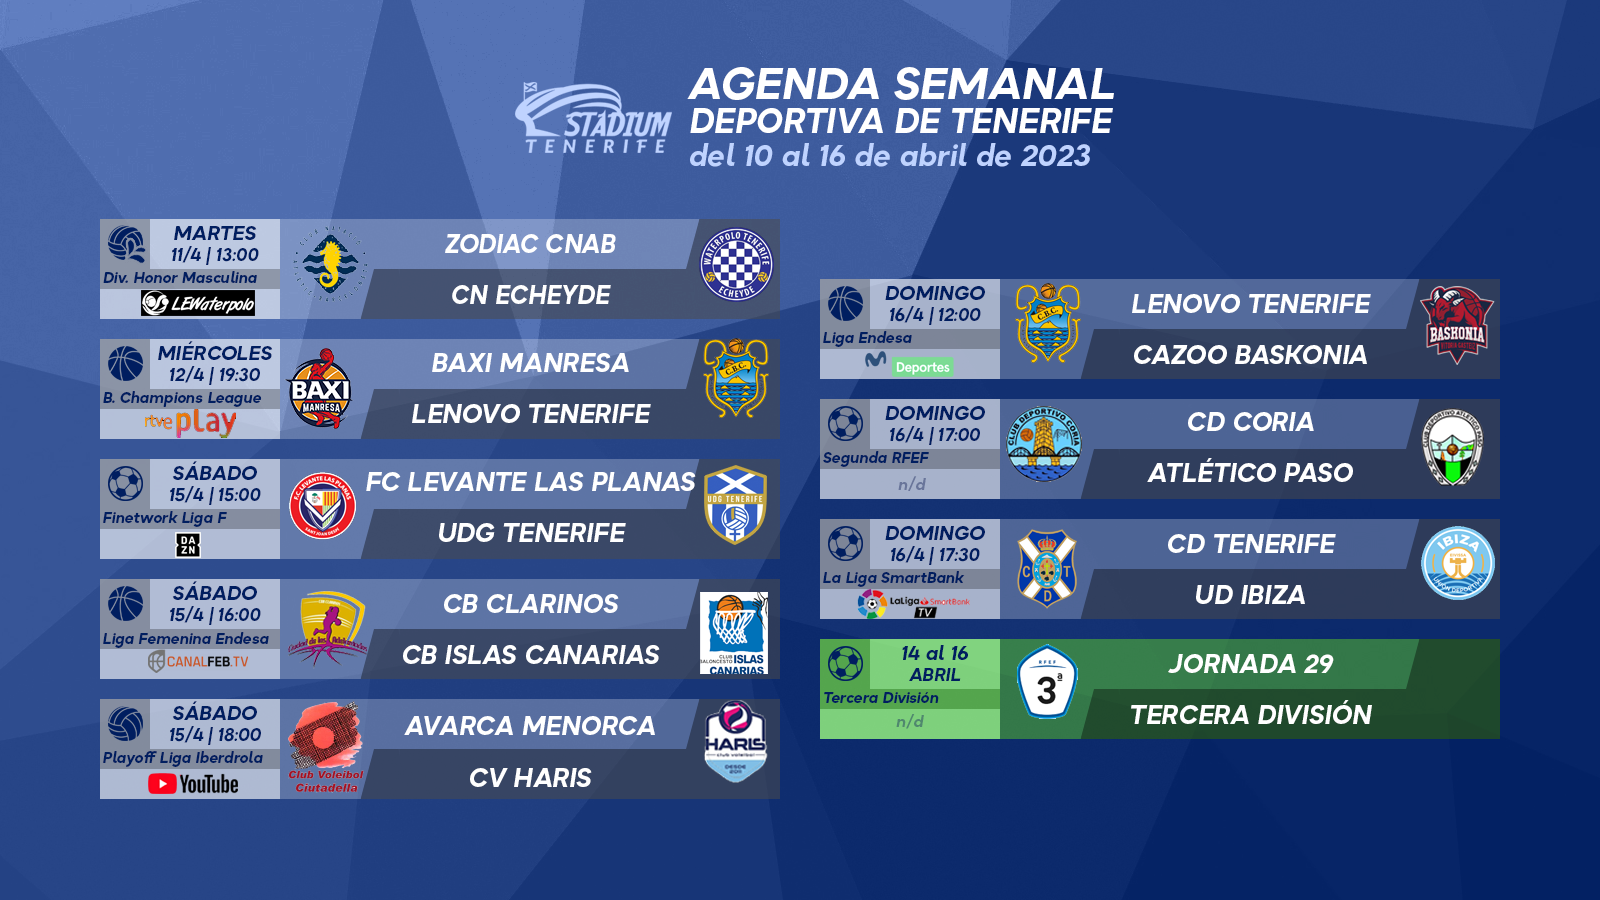 Agenda Semanal Deportiva de Tenerife (10 al 16 de abril)